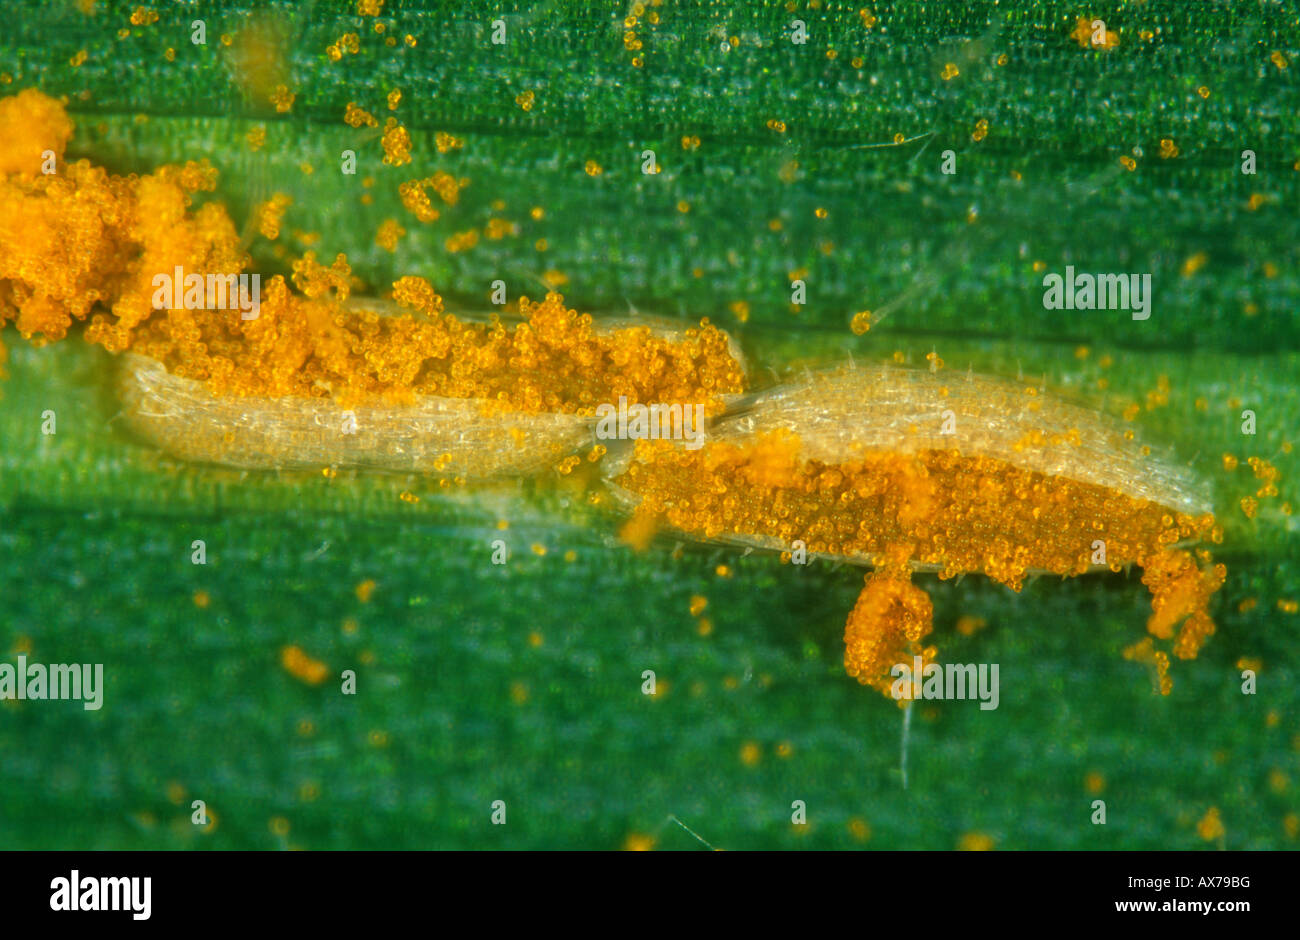 Krone Rost Puccinia Coronata Pusteln auf einer Wiese Rasen Poa sp Blatt Stockfoto